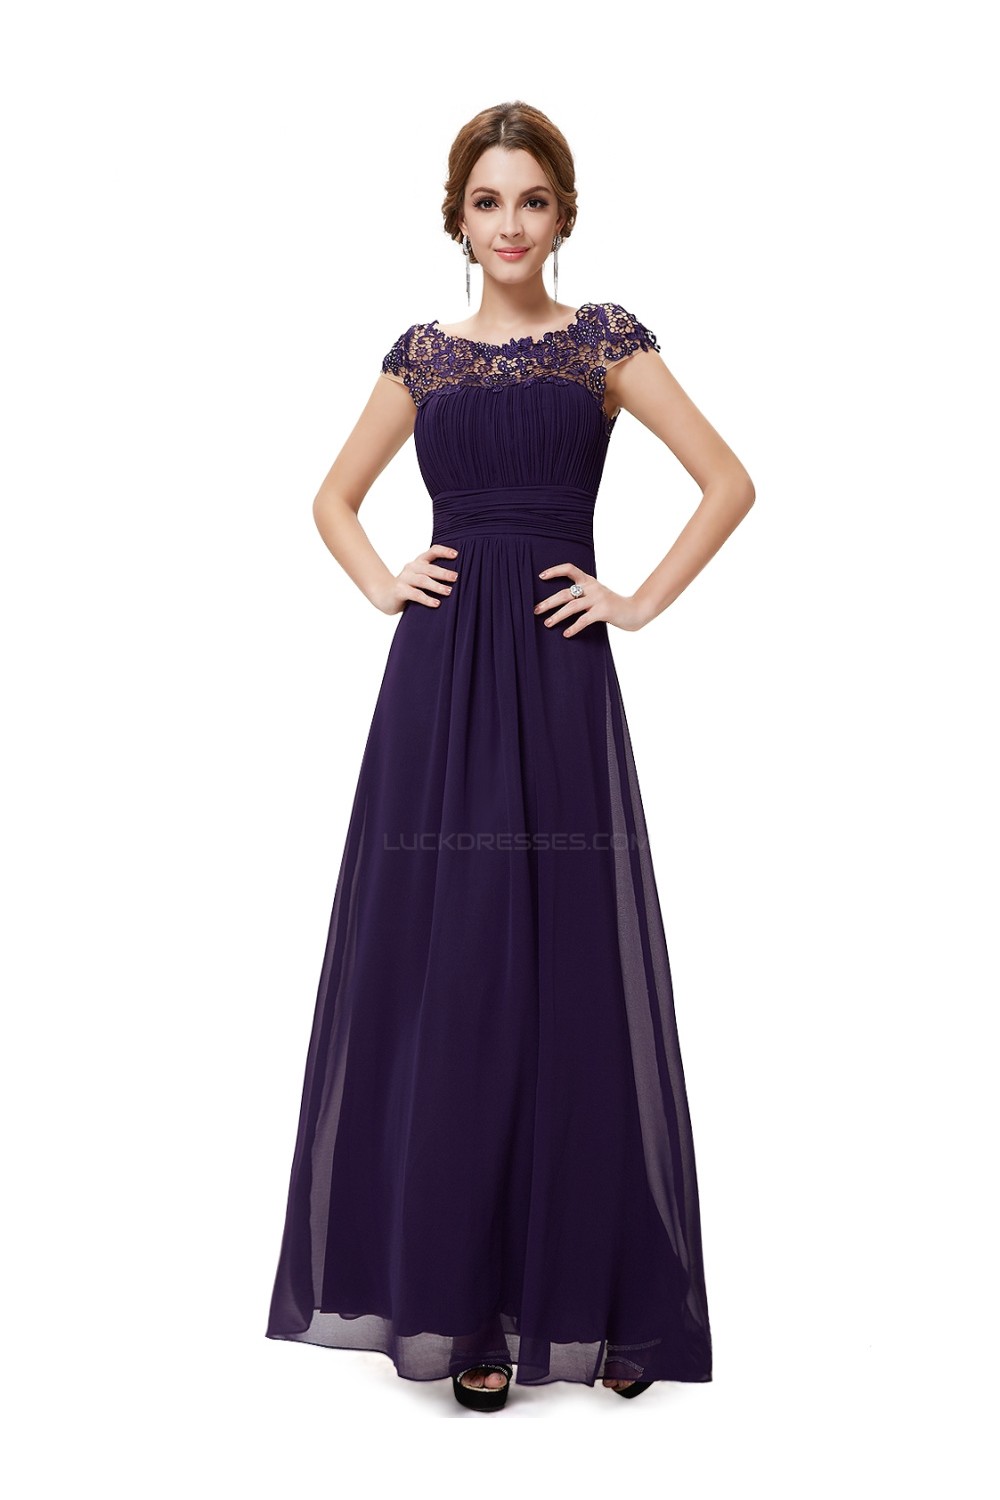 ALine CapSleeve Long Purple Chiffon Bridesmaid Dresses